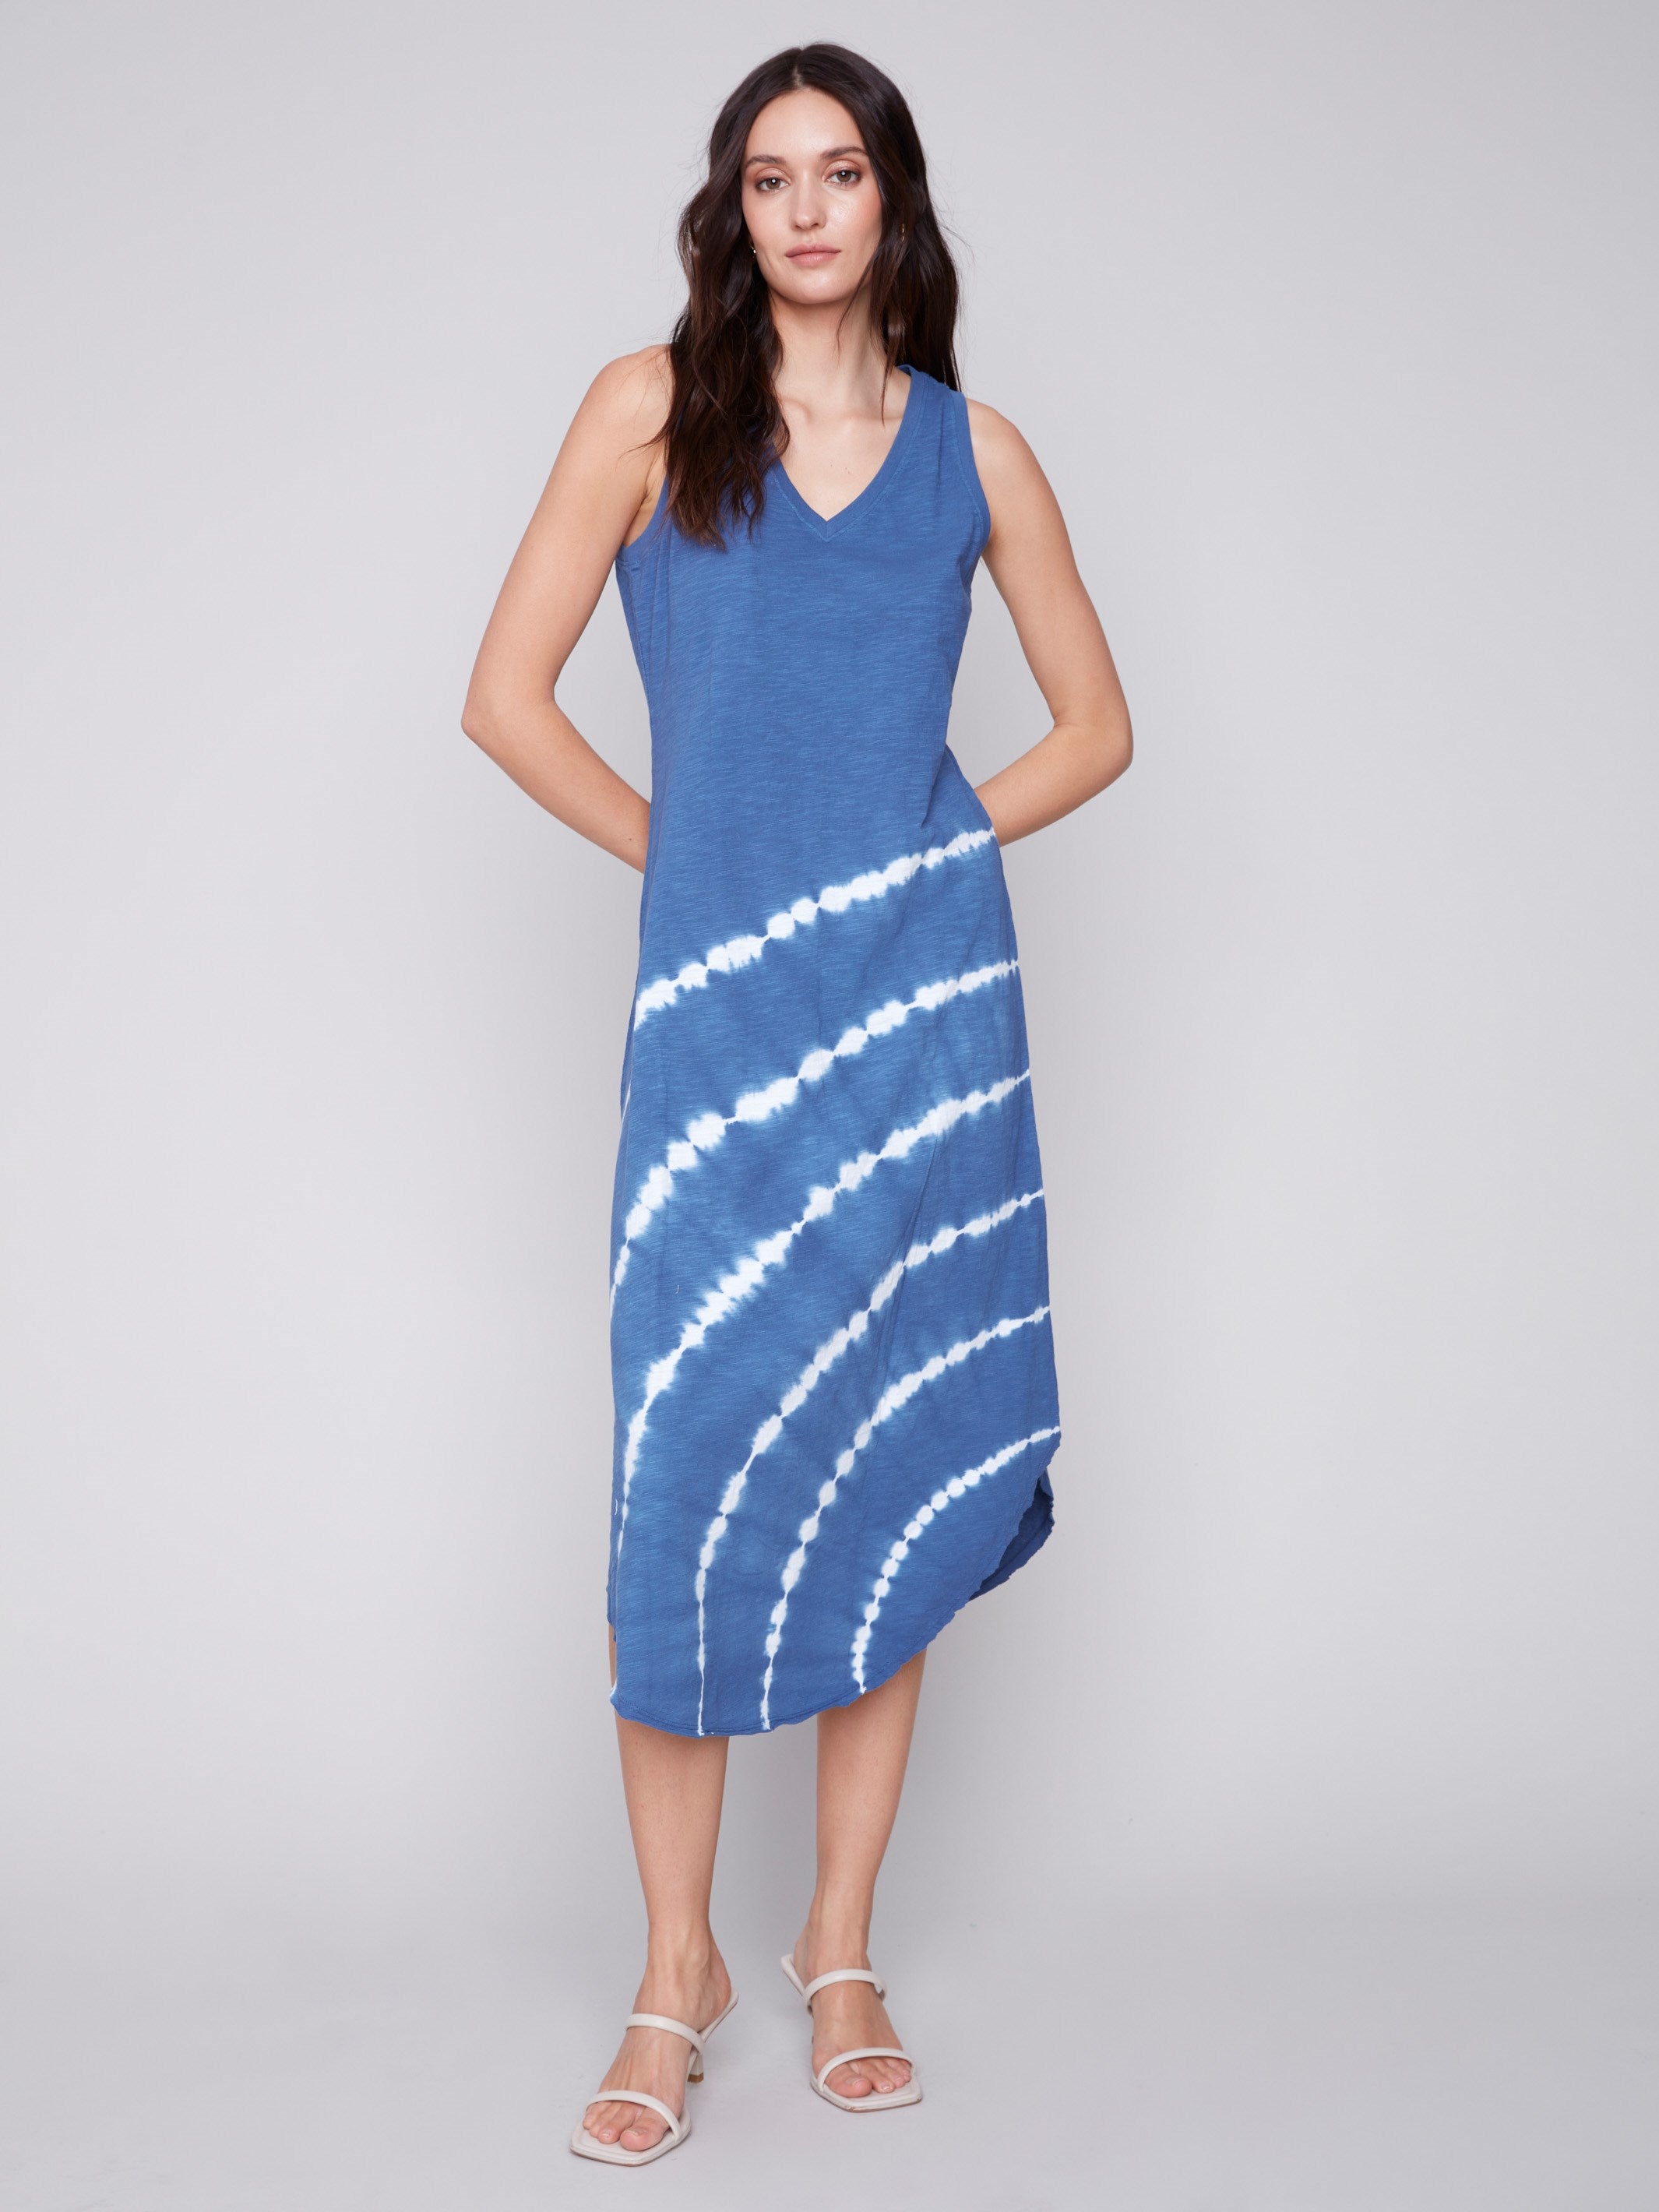 Charlie B Printed Sleeveless Cotton Dress - Denim - Image 1